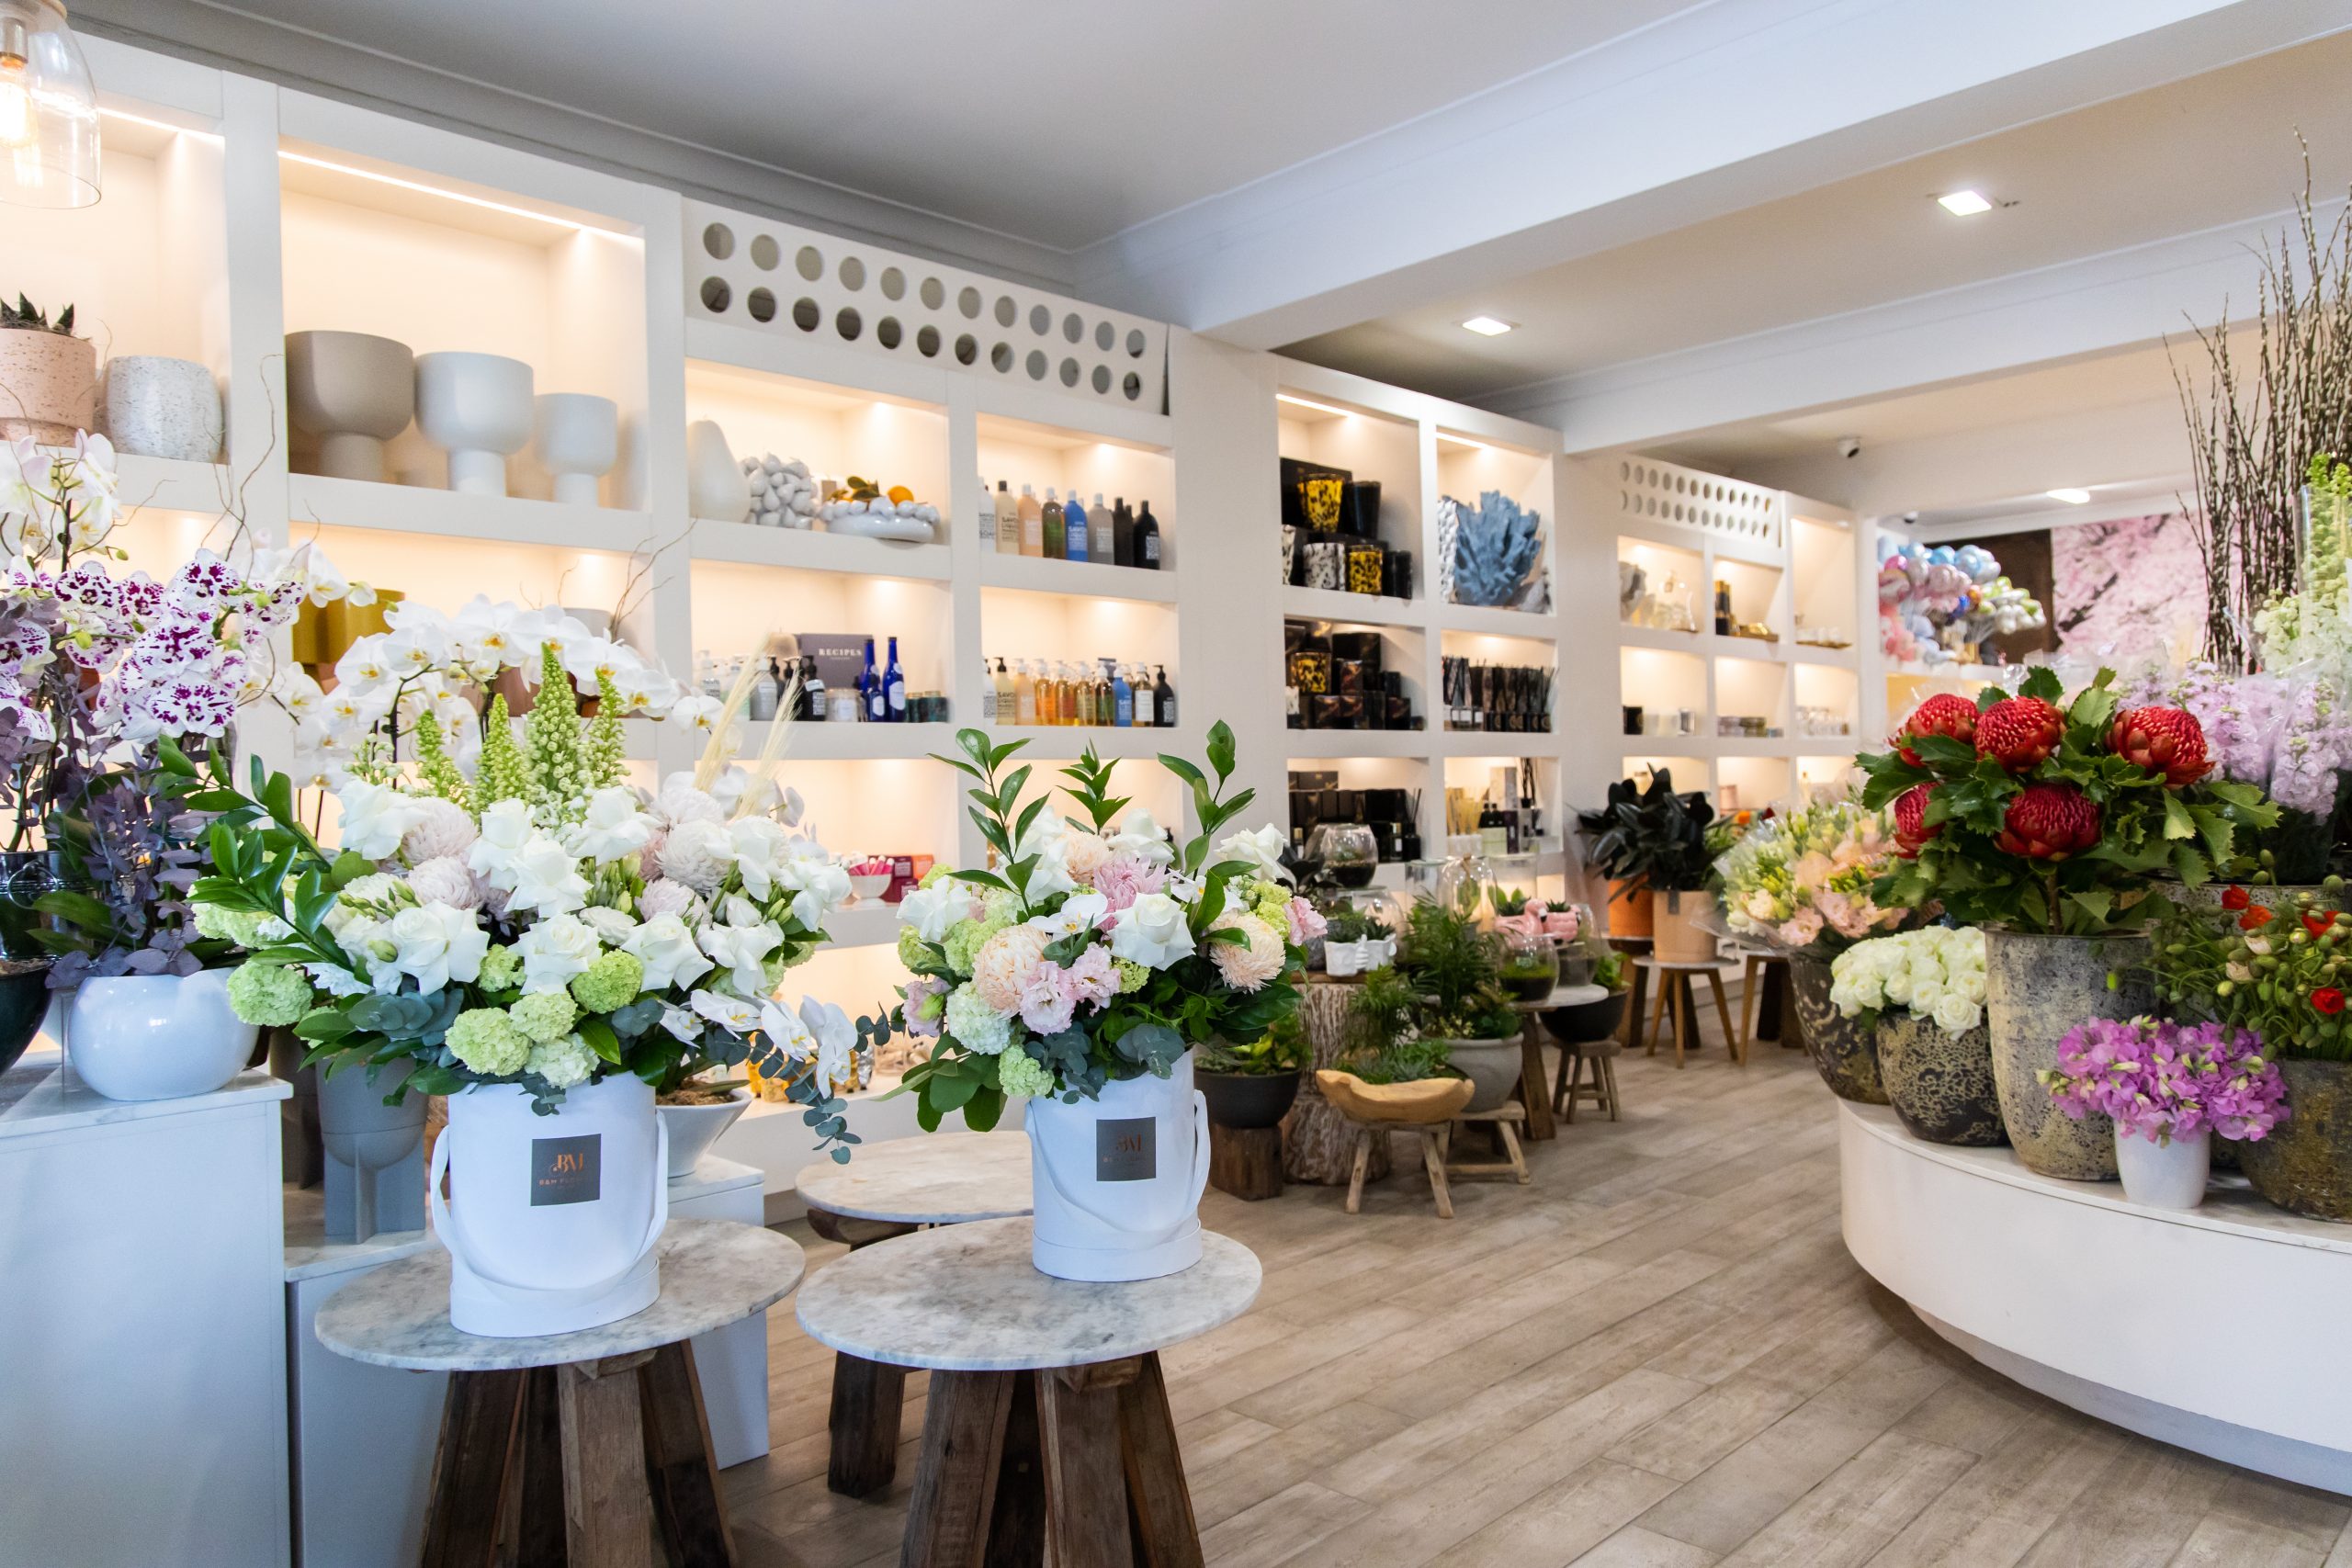 Buy Flowers From The Best Sydney Florist Online - B & M Florist